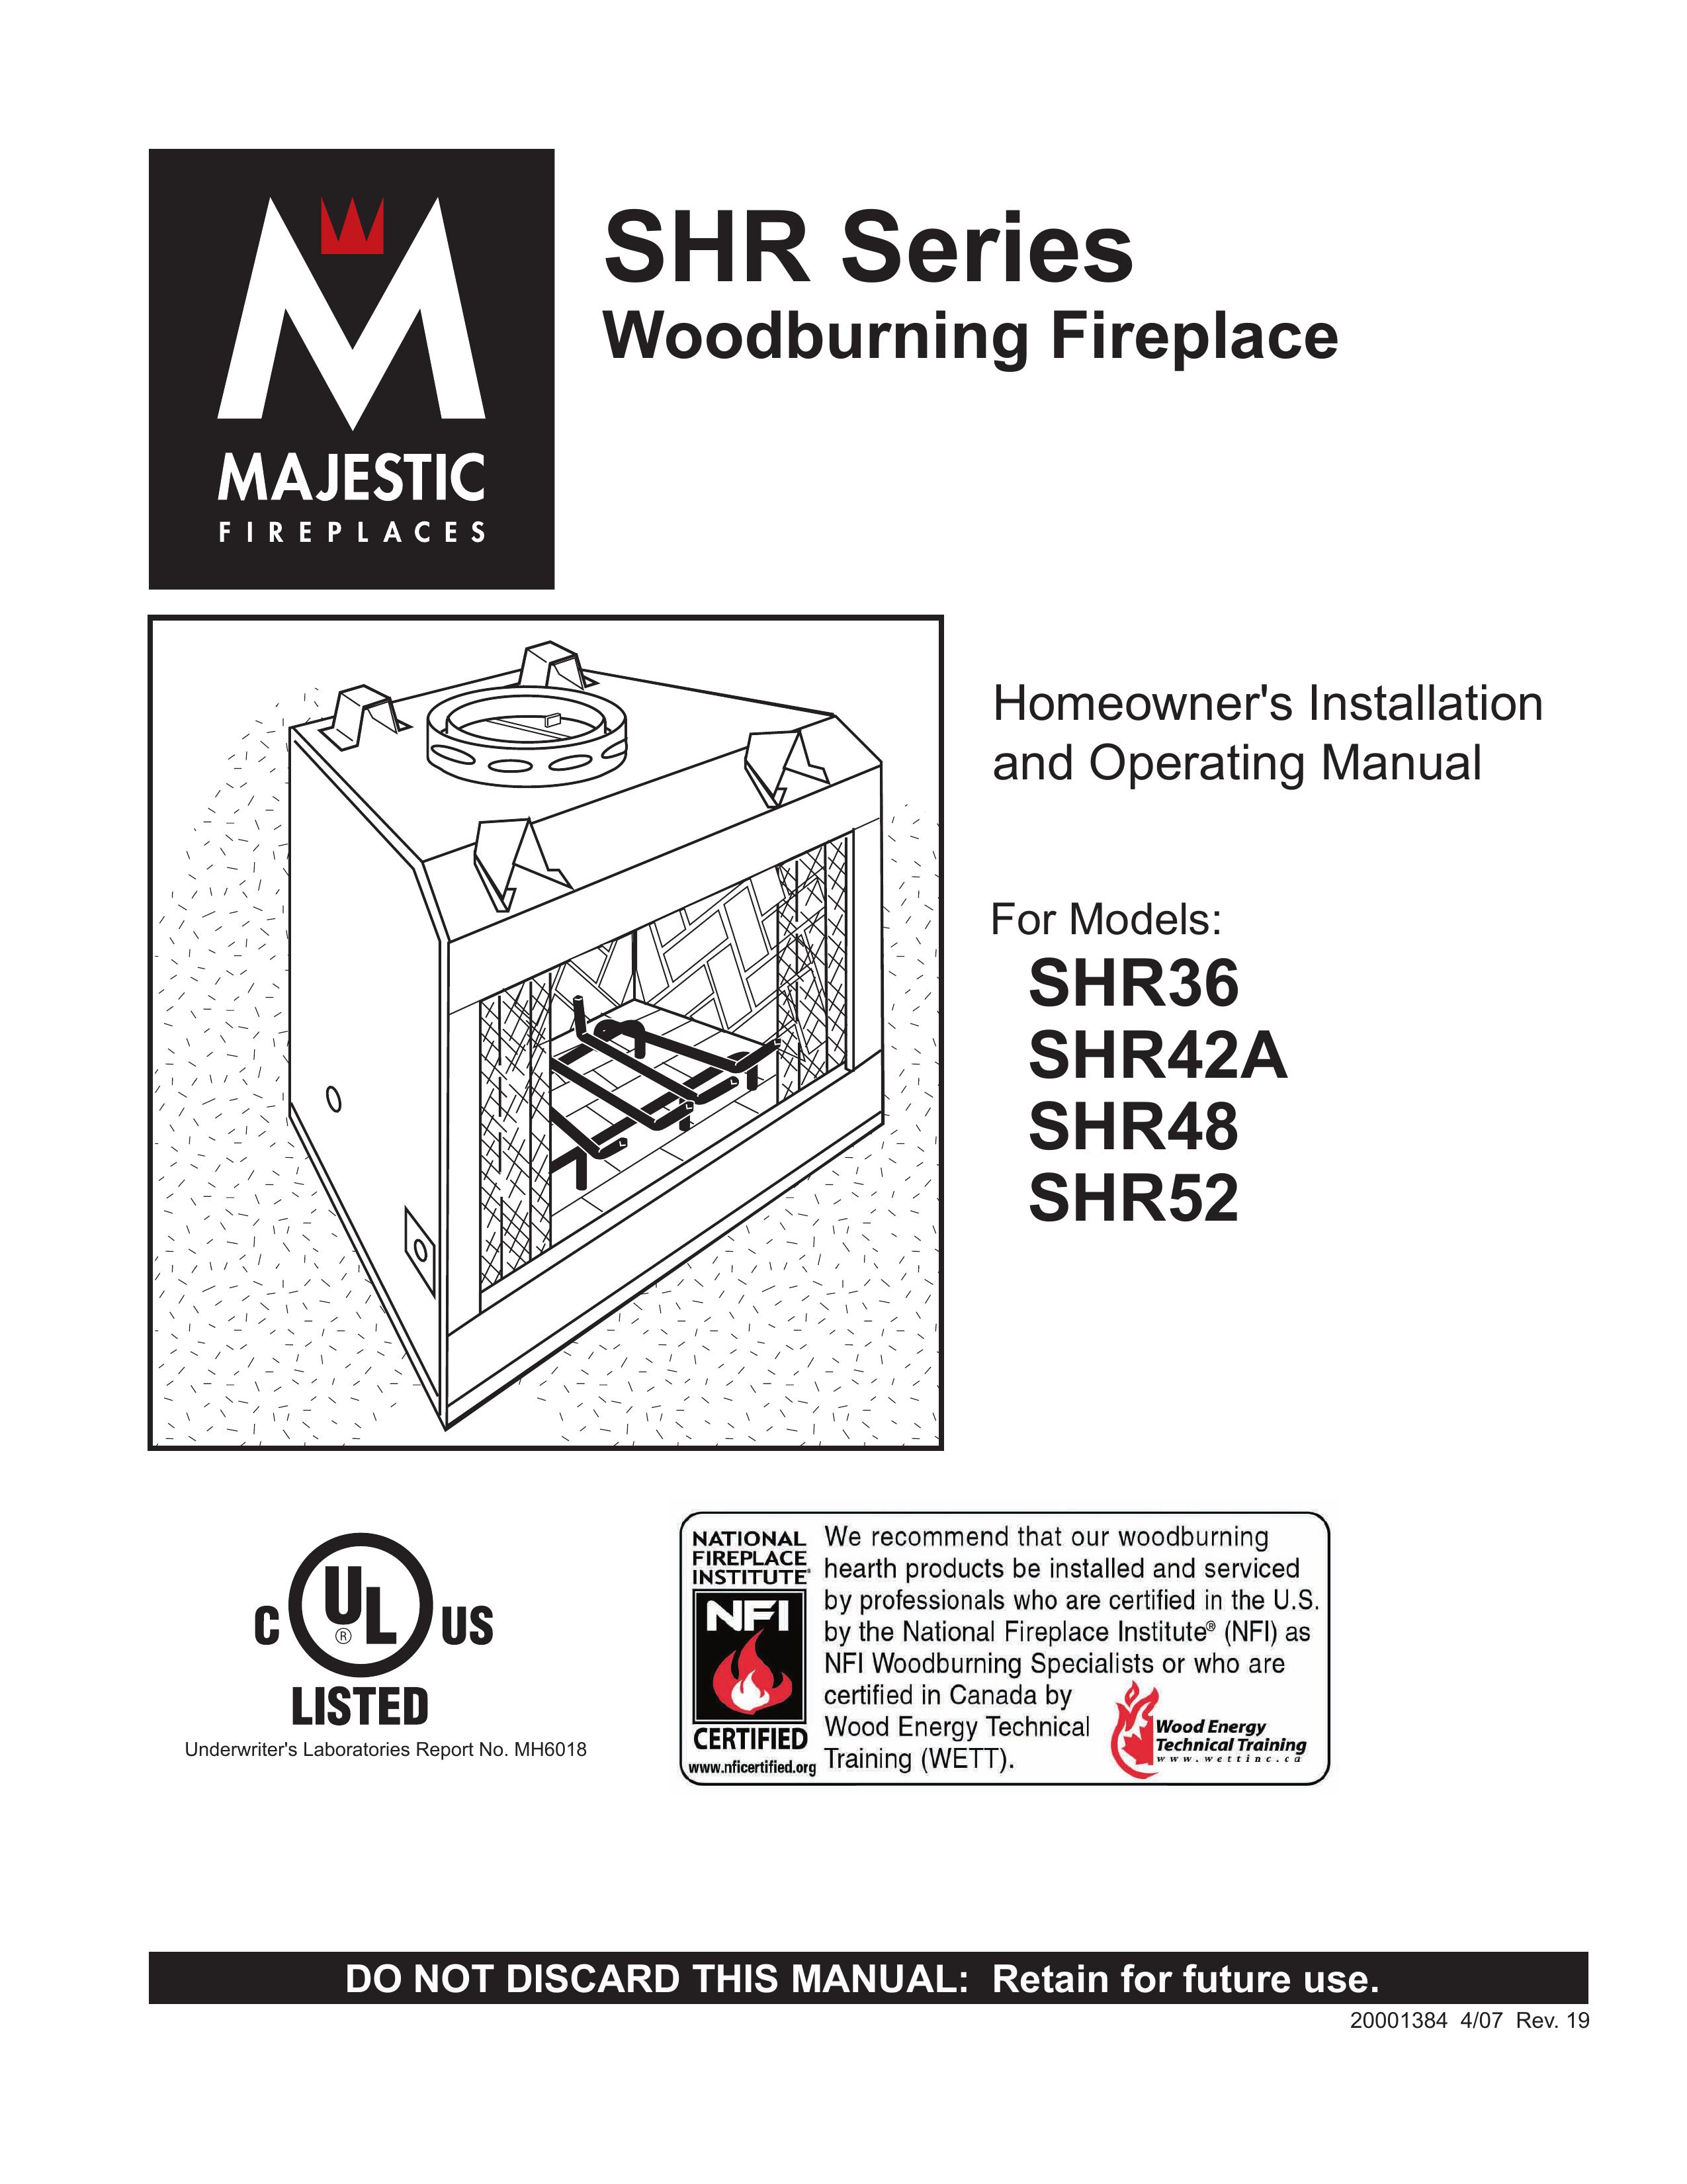 CFM Corporation SHR52 Outdoor Fireplace User Manual